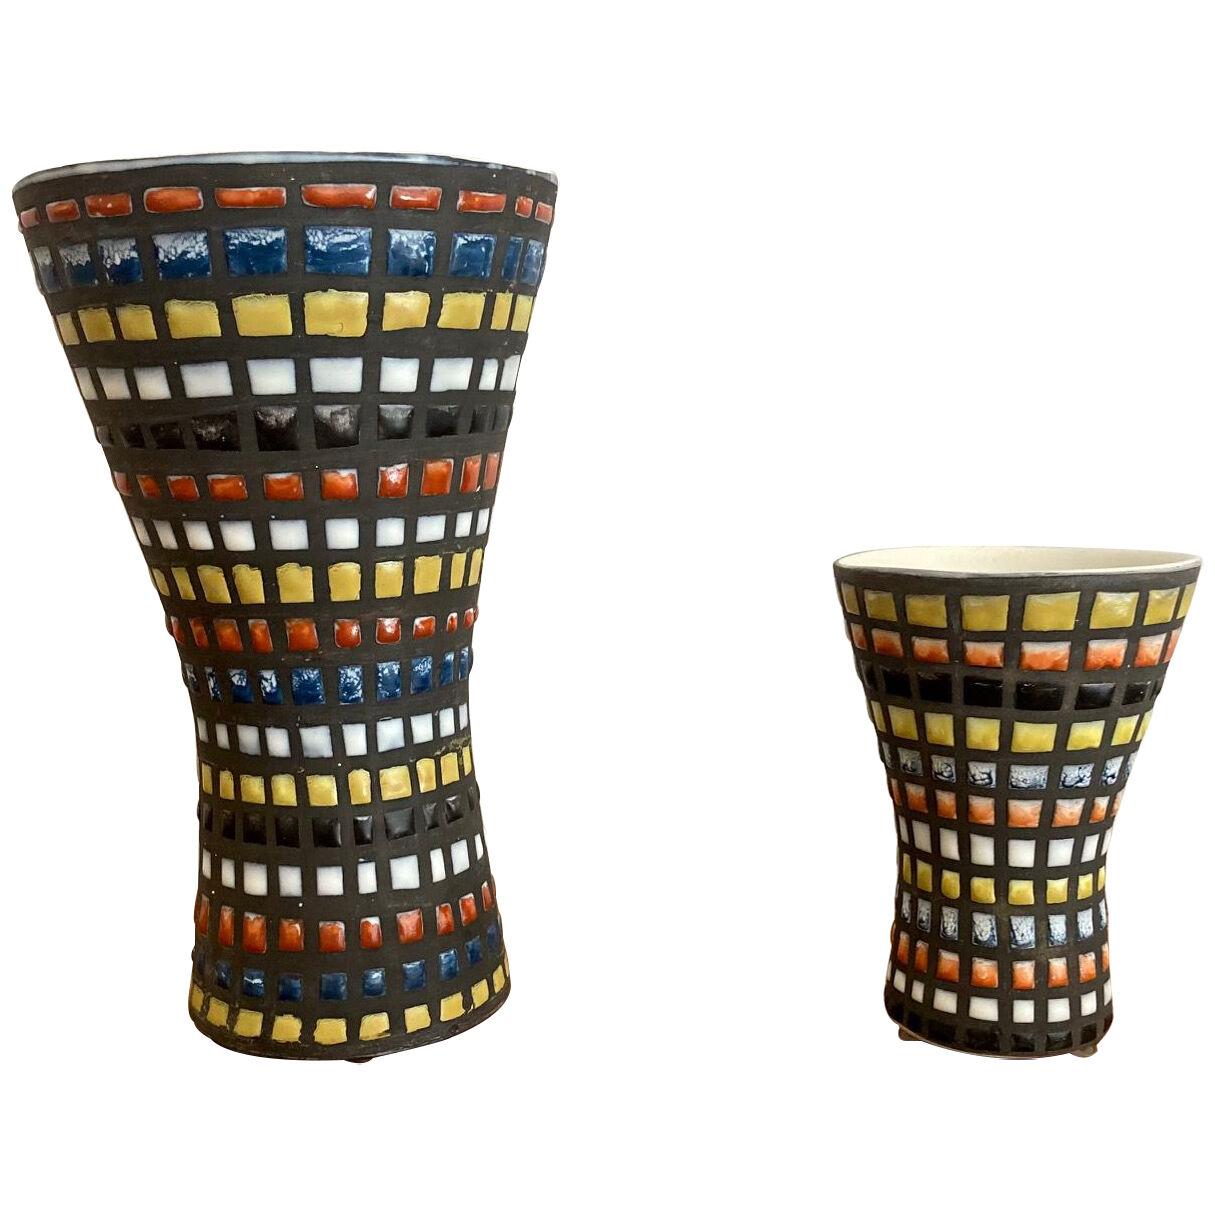  2 "Diabolo" Ceramic Vases, by Roger Capron, Vallauris